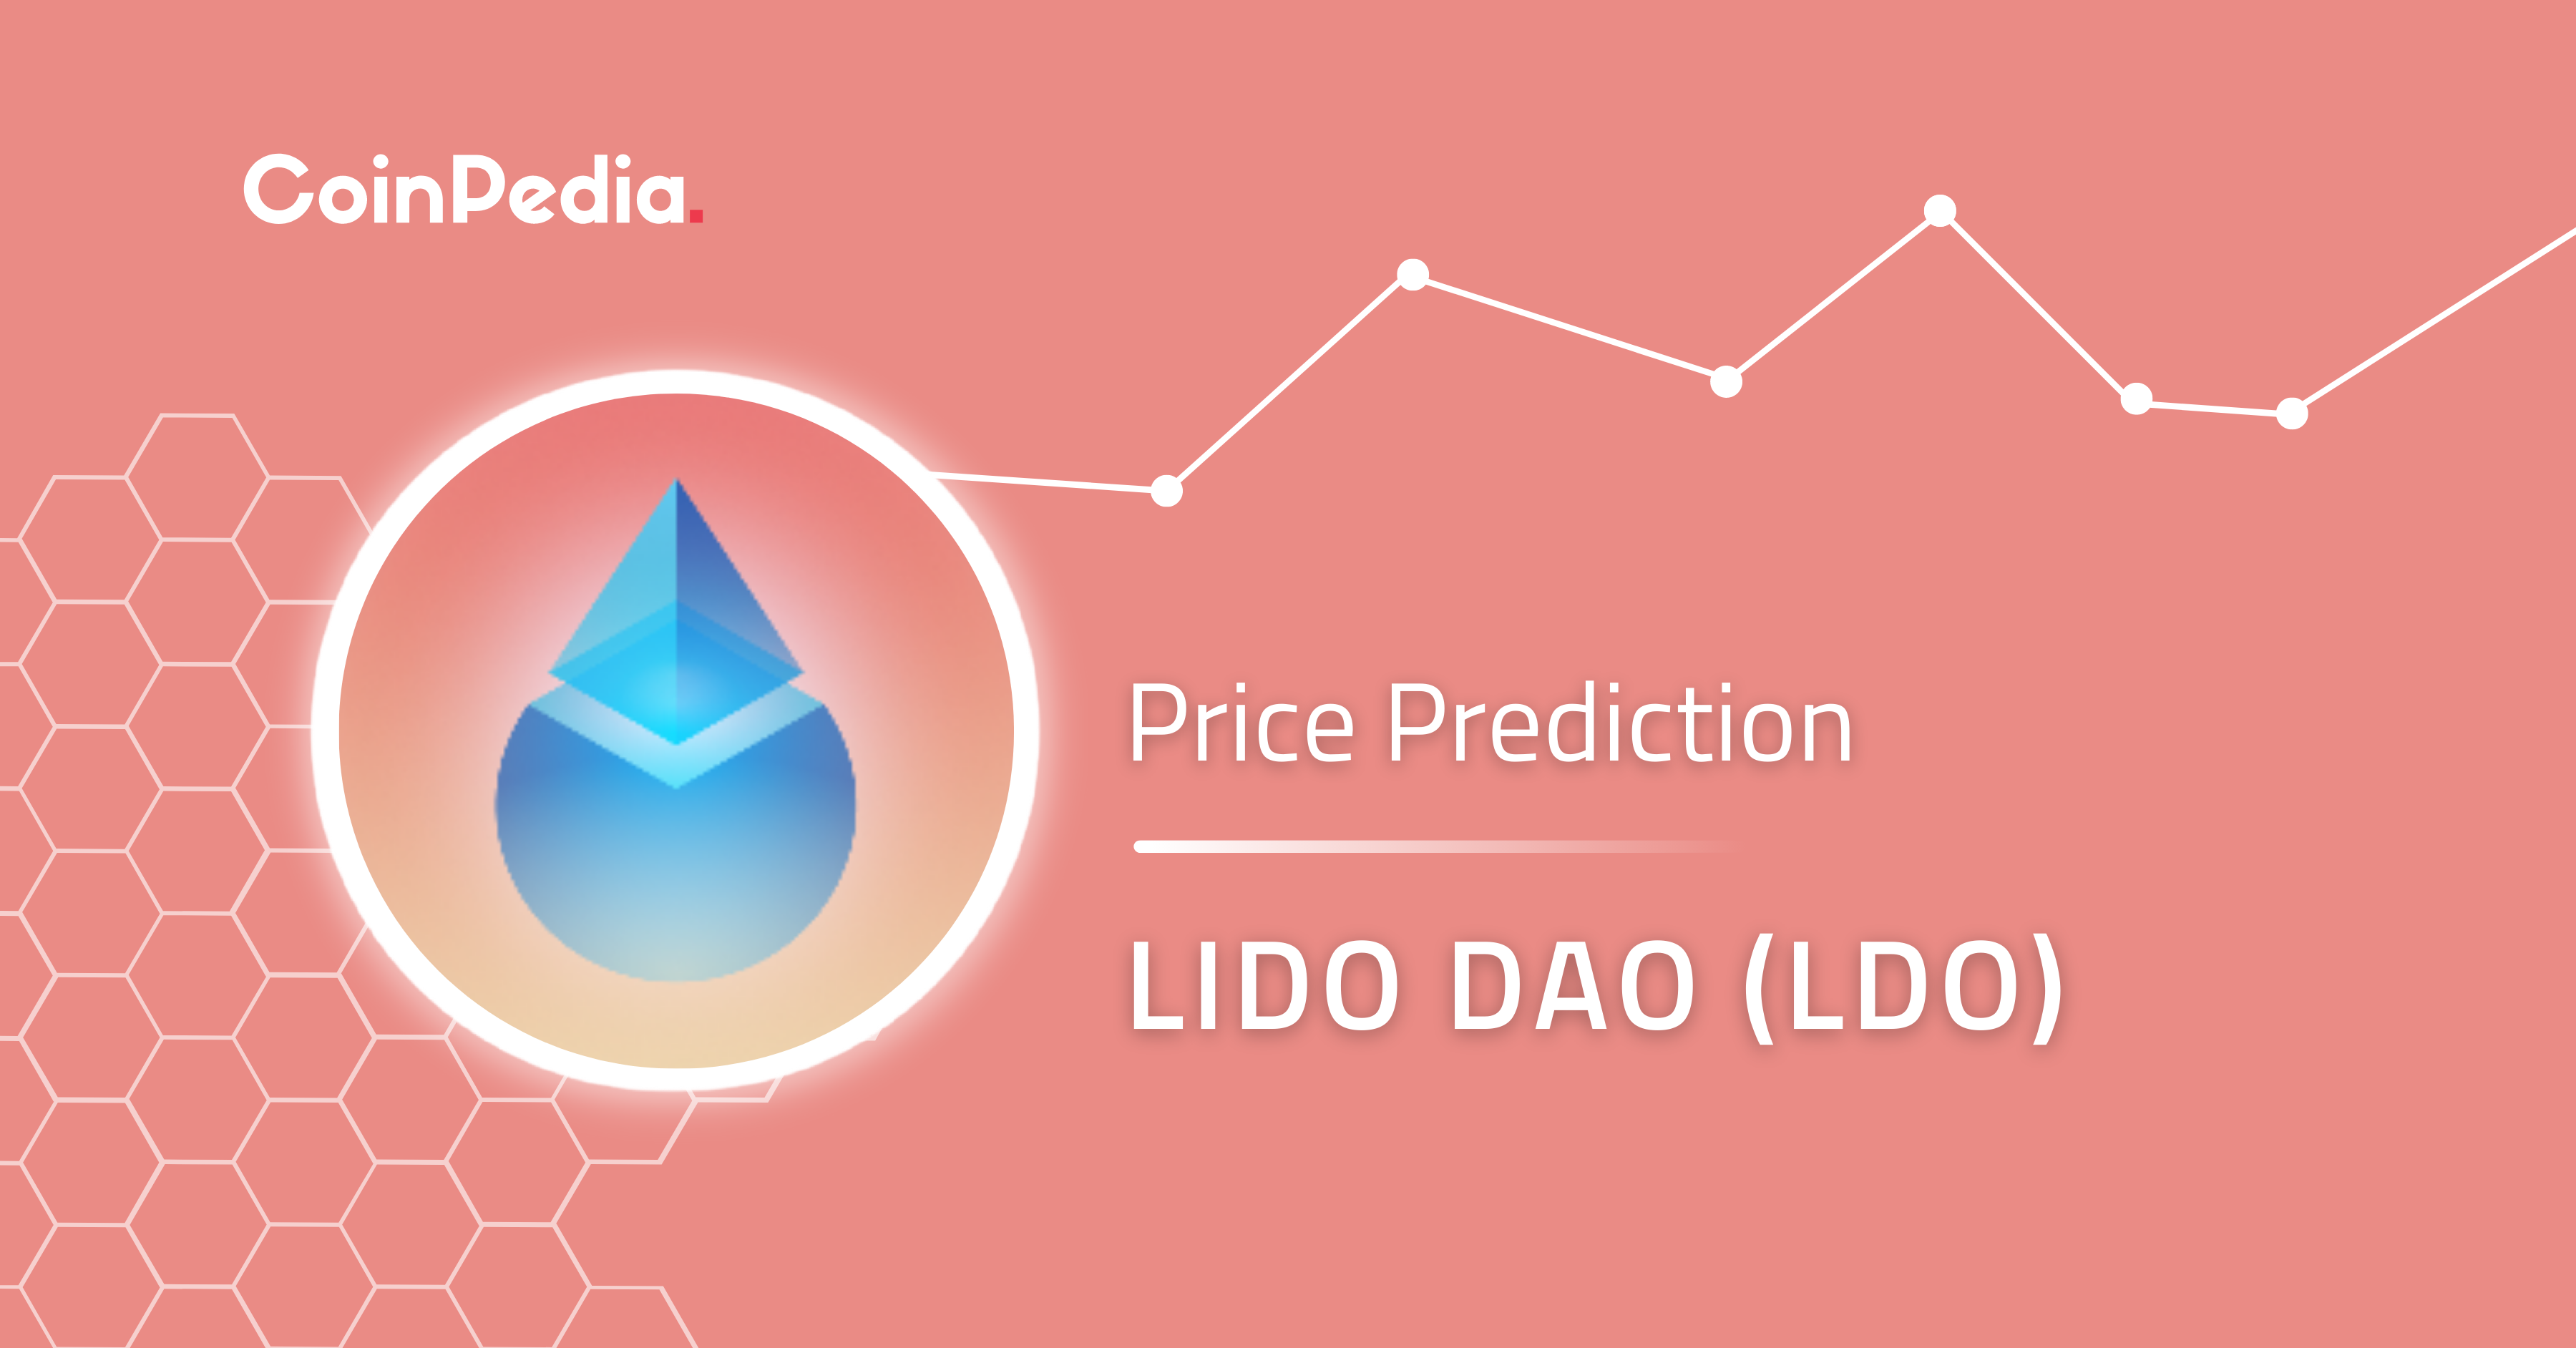 Lido DAO Price Prediction 2023, 2024, 2025: Will The LDO Price Surge This Year?